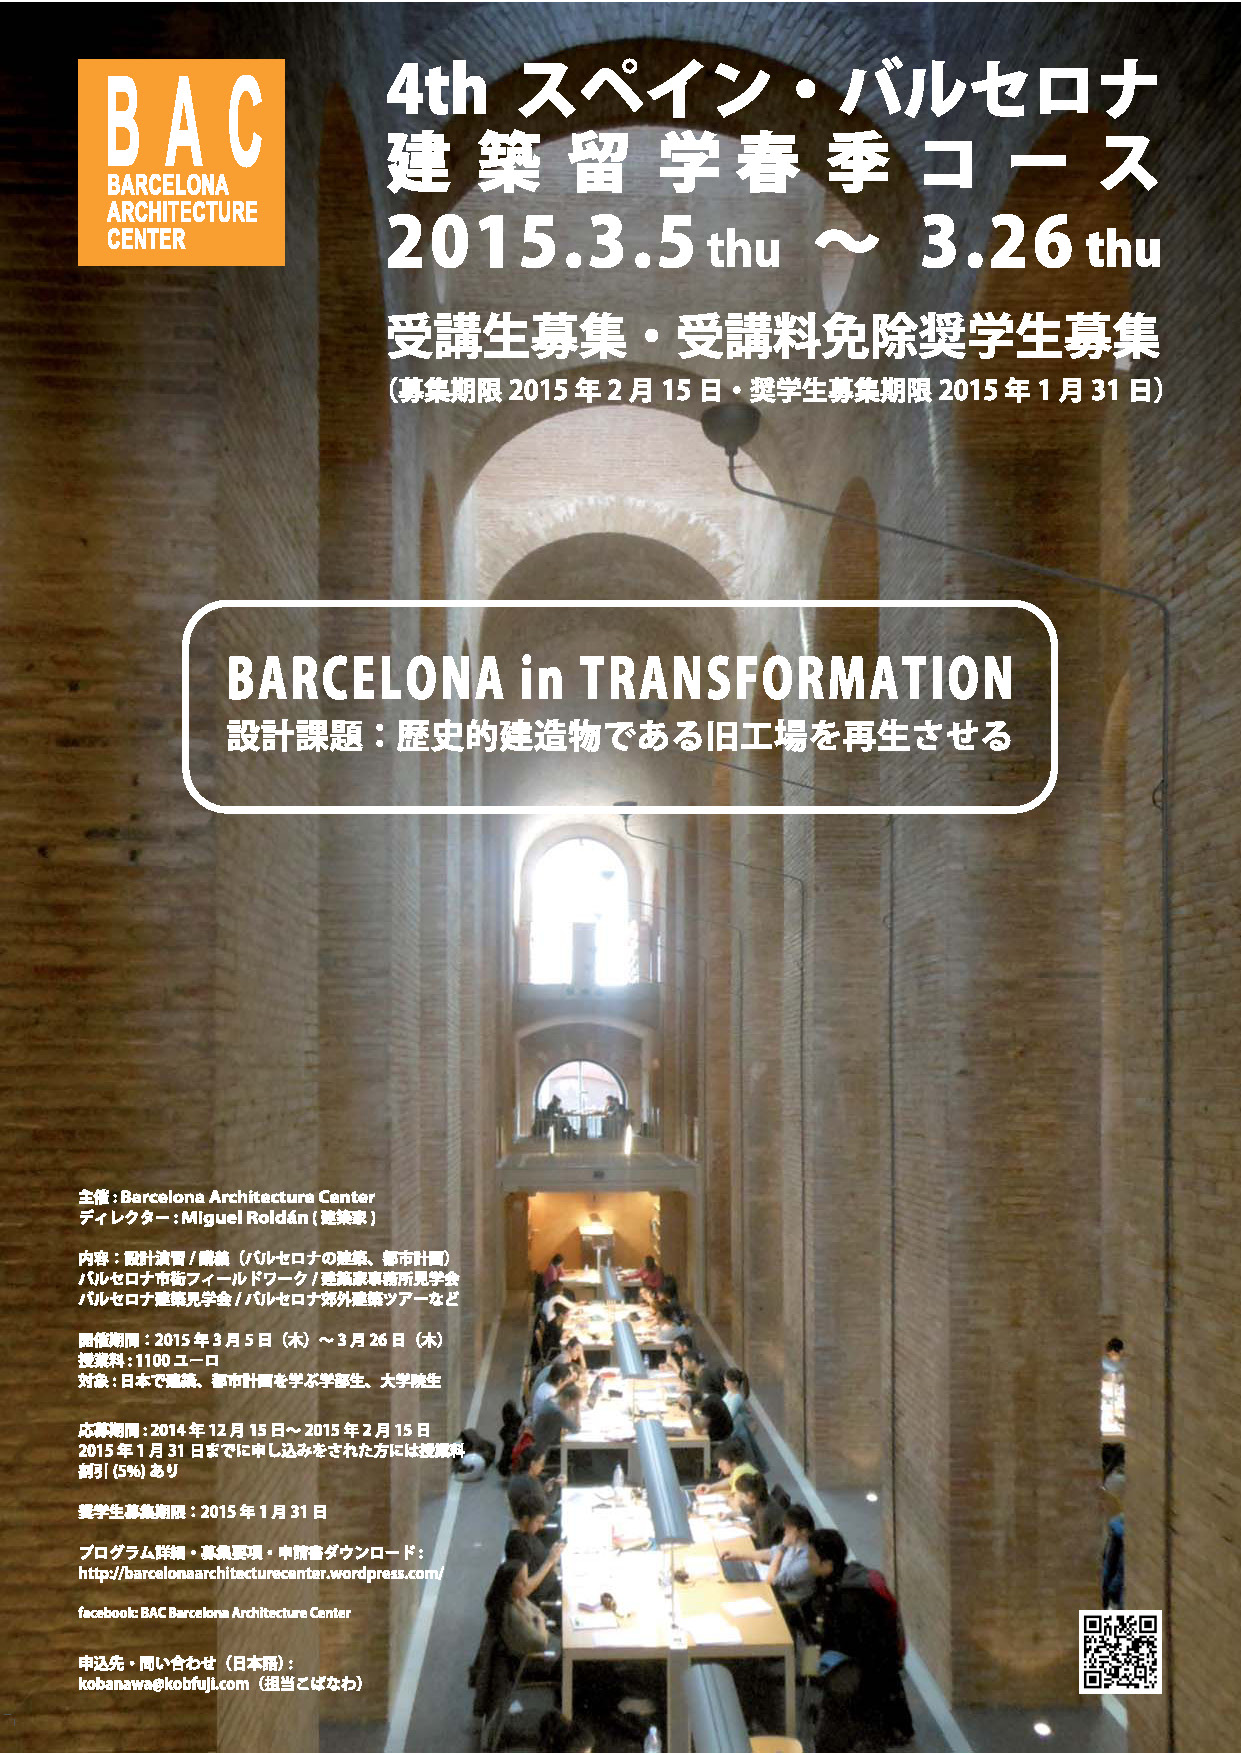 December 14 Bac Barcelona Architecture Center